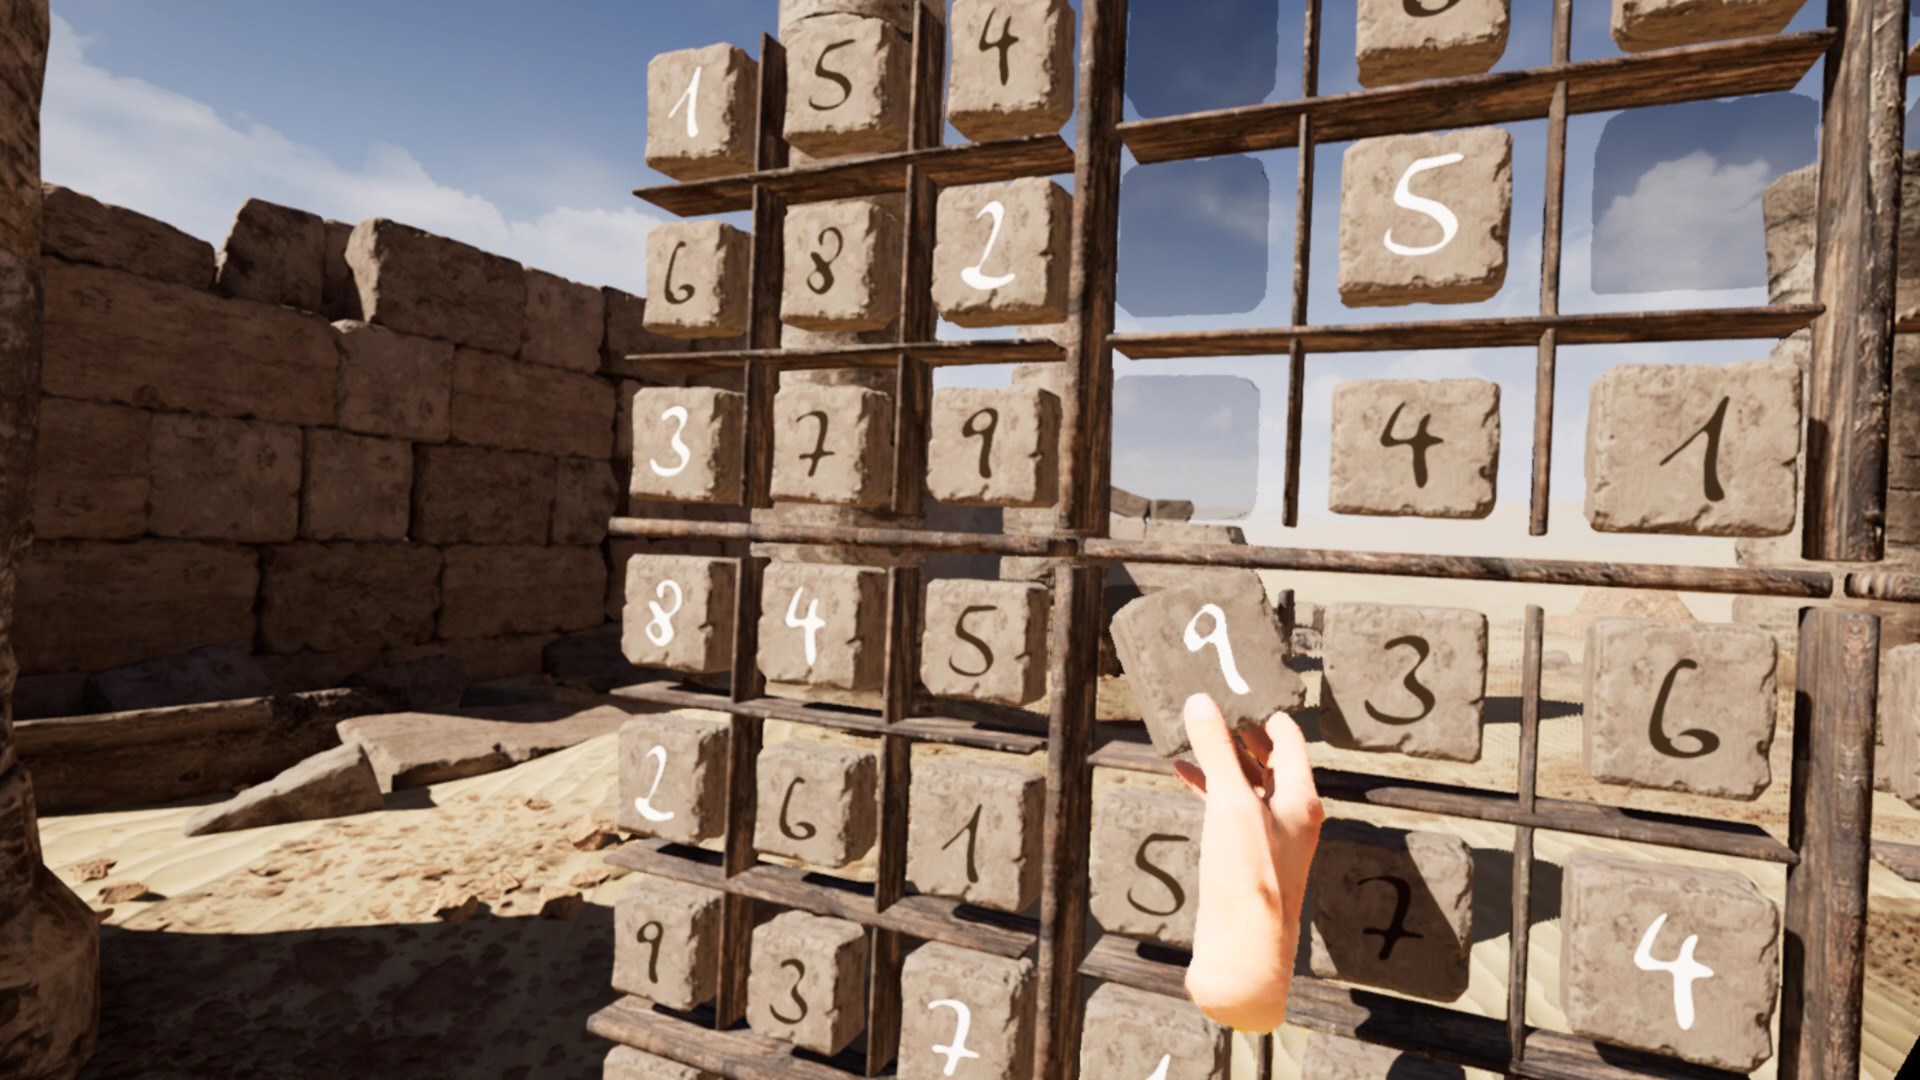 Arabian Stones - The VR Sudoku Game Free Download